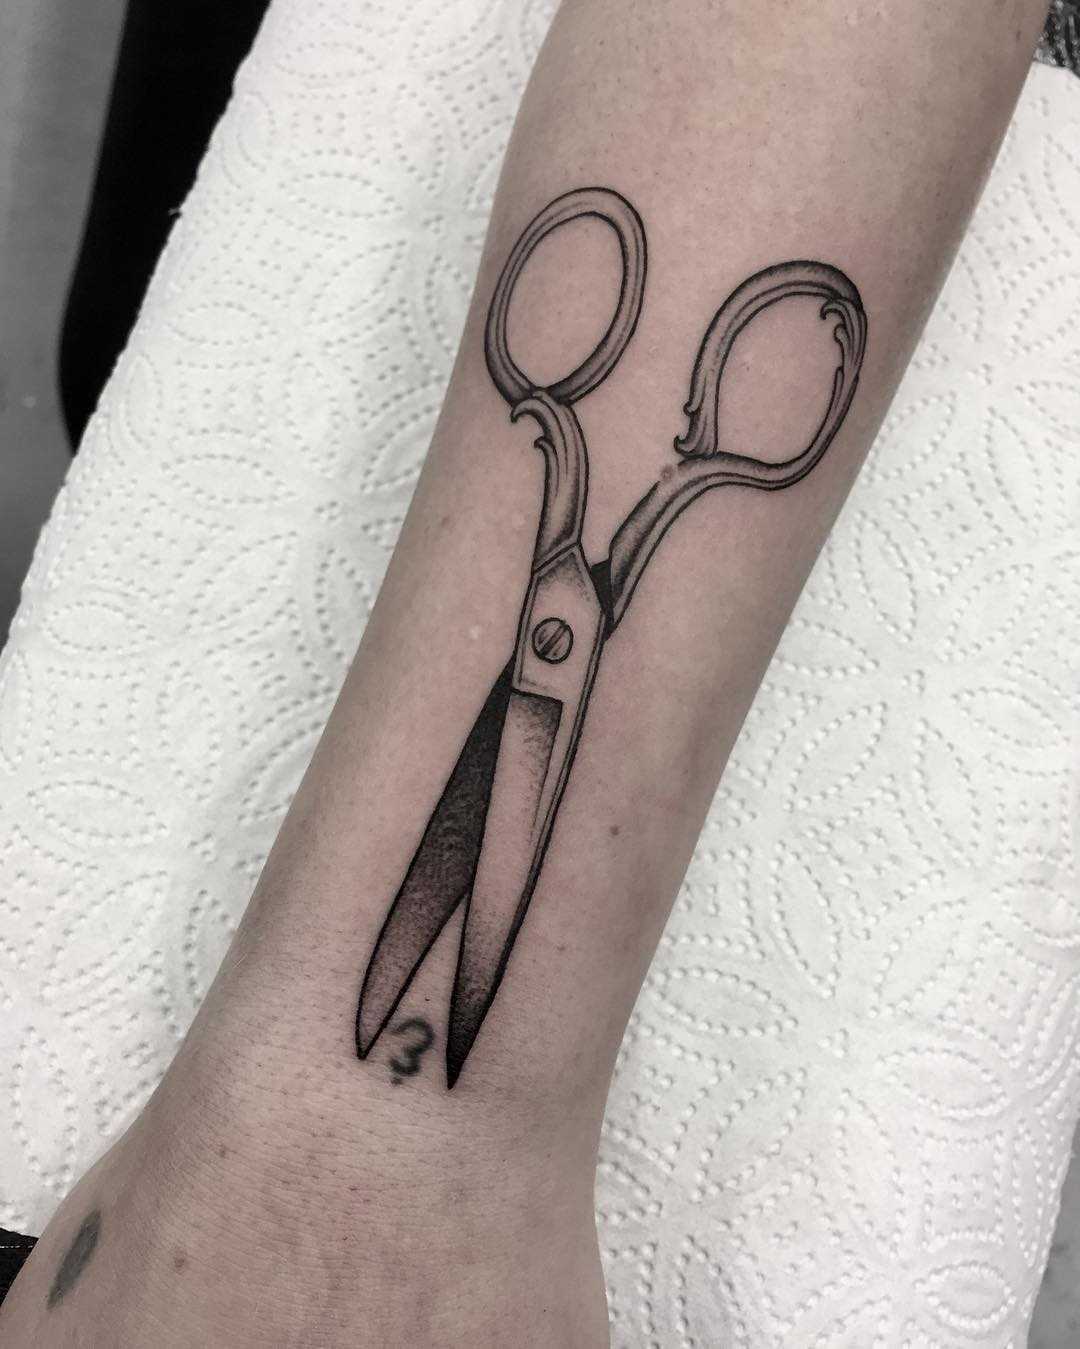 Scissors tattooed on the forearm